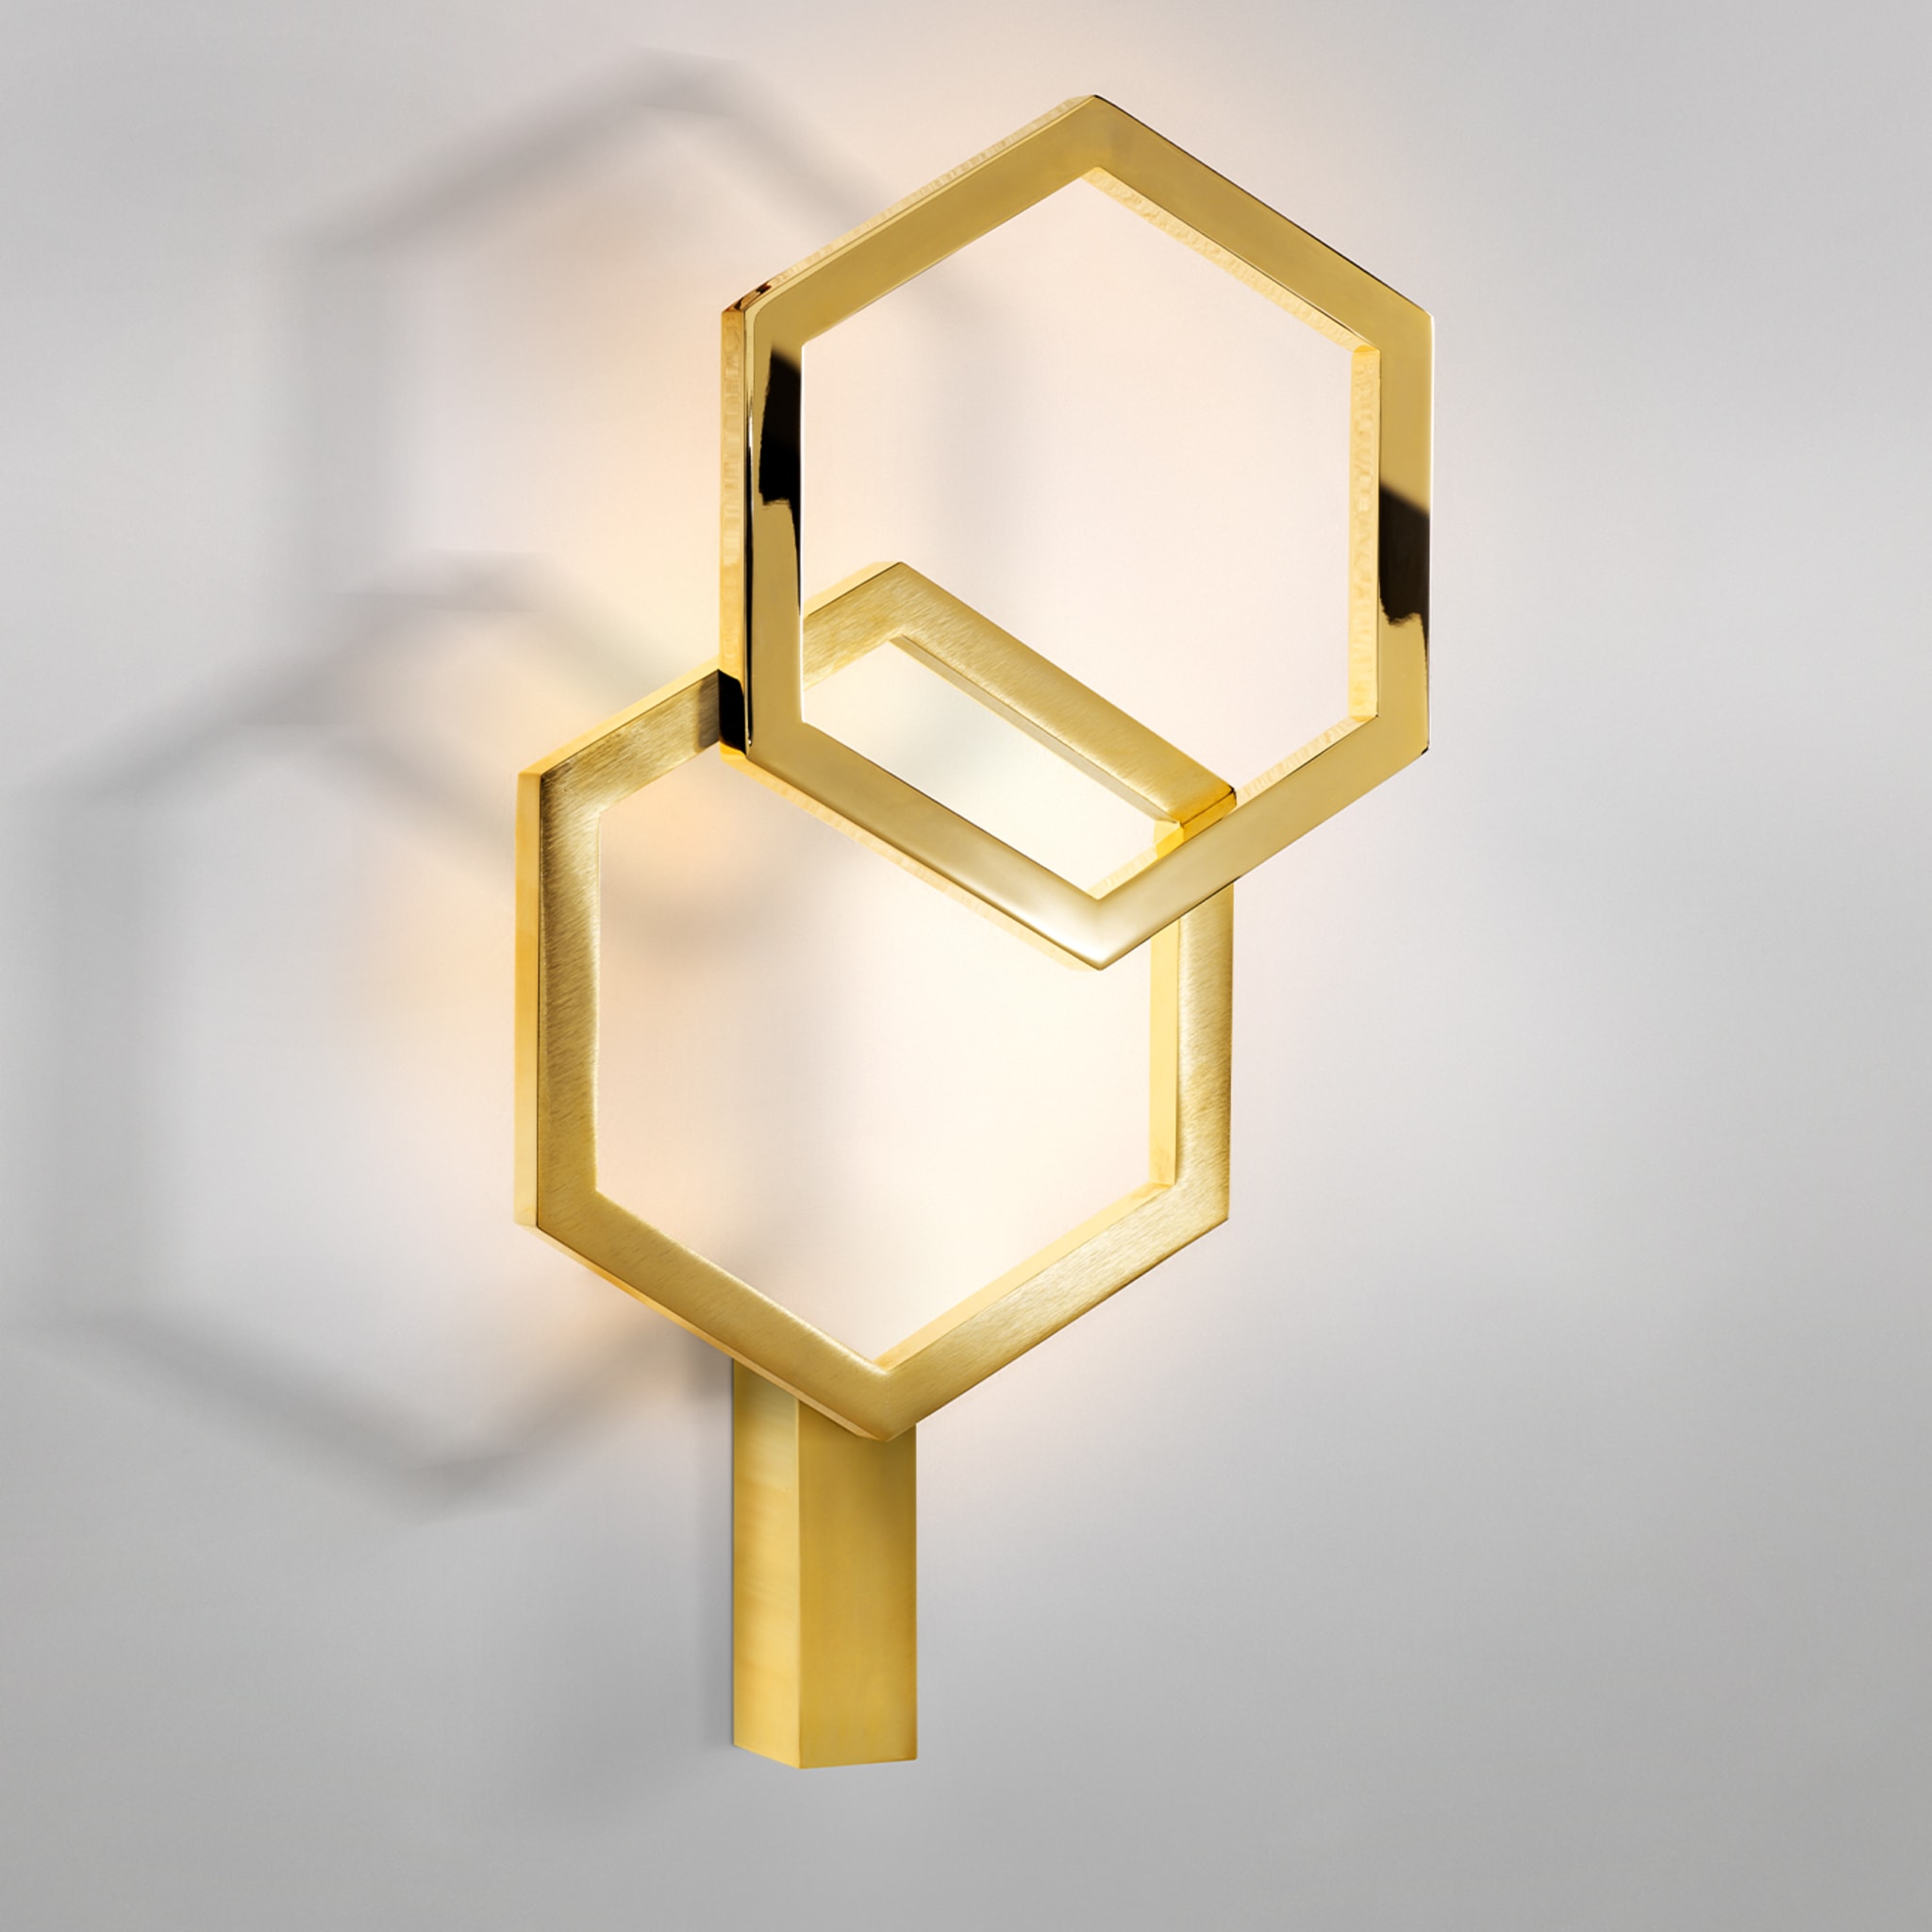 Hexagon Golden Sconce #1 - Alternative view 1